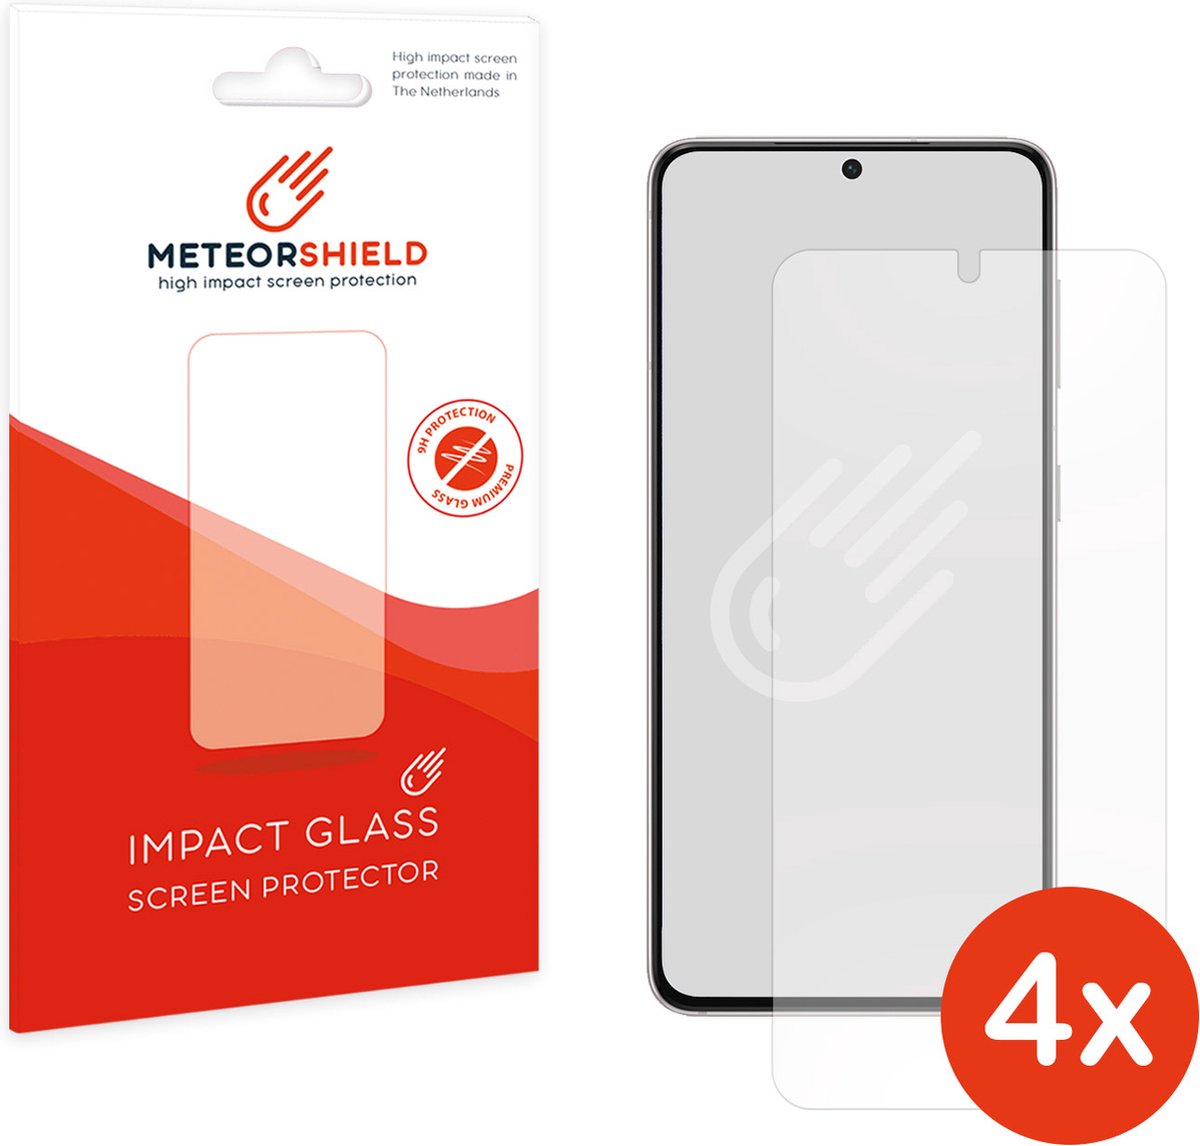 4 stuks: Meteorshield Samsung Galaxy S21 screenprotector - Ultra clear impact glass